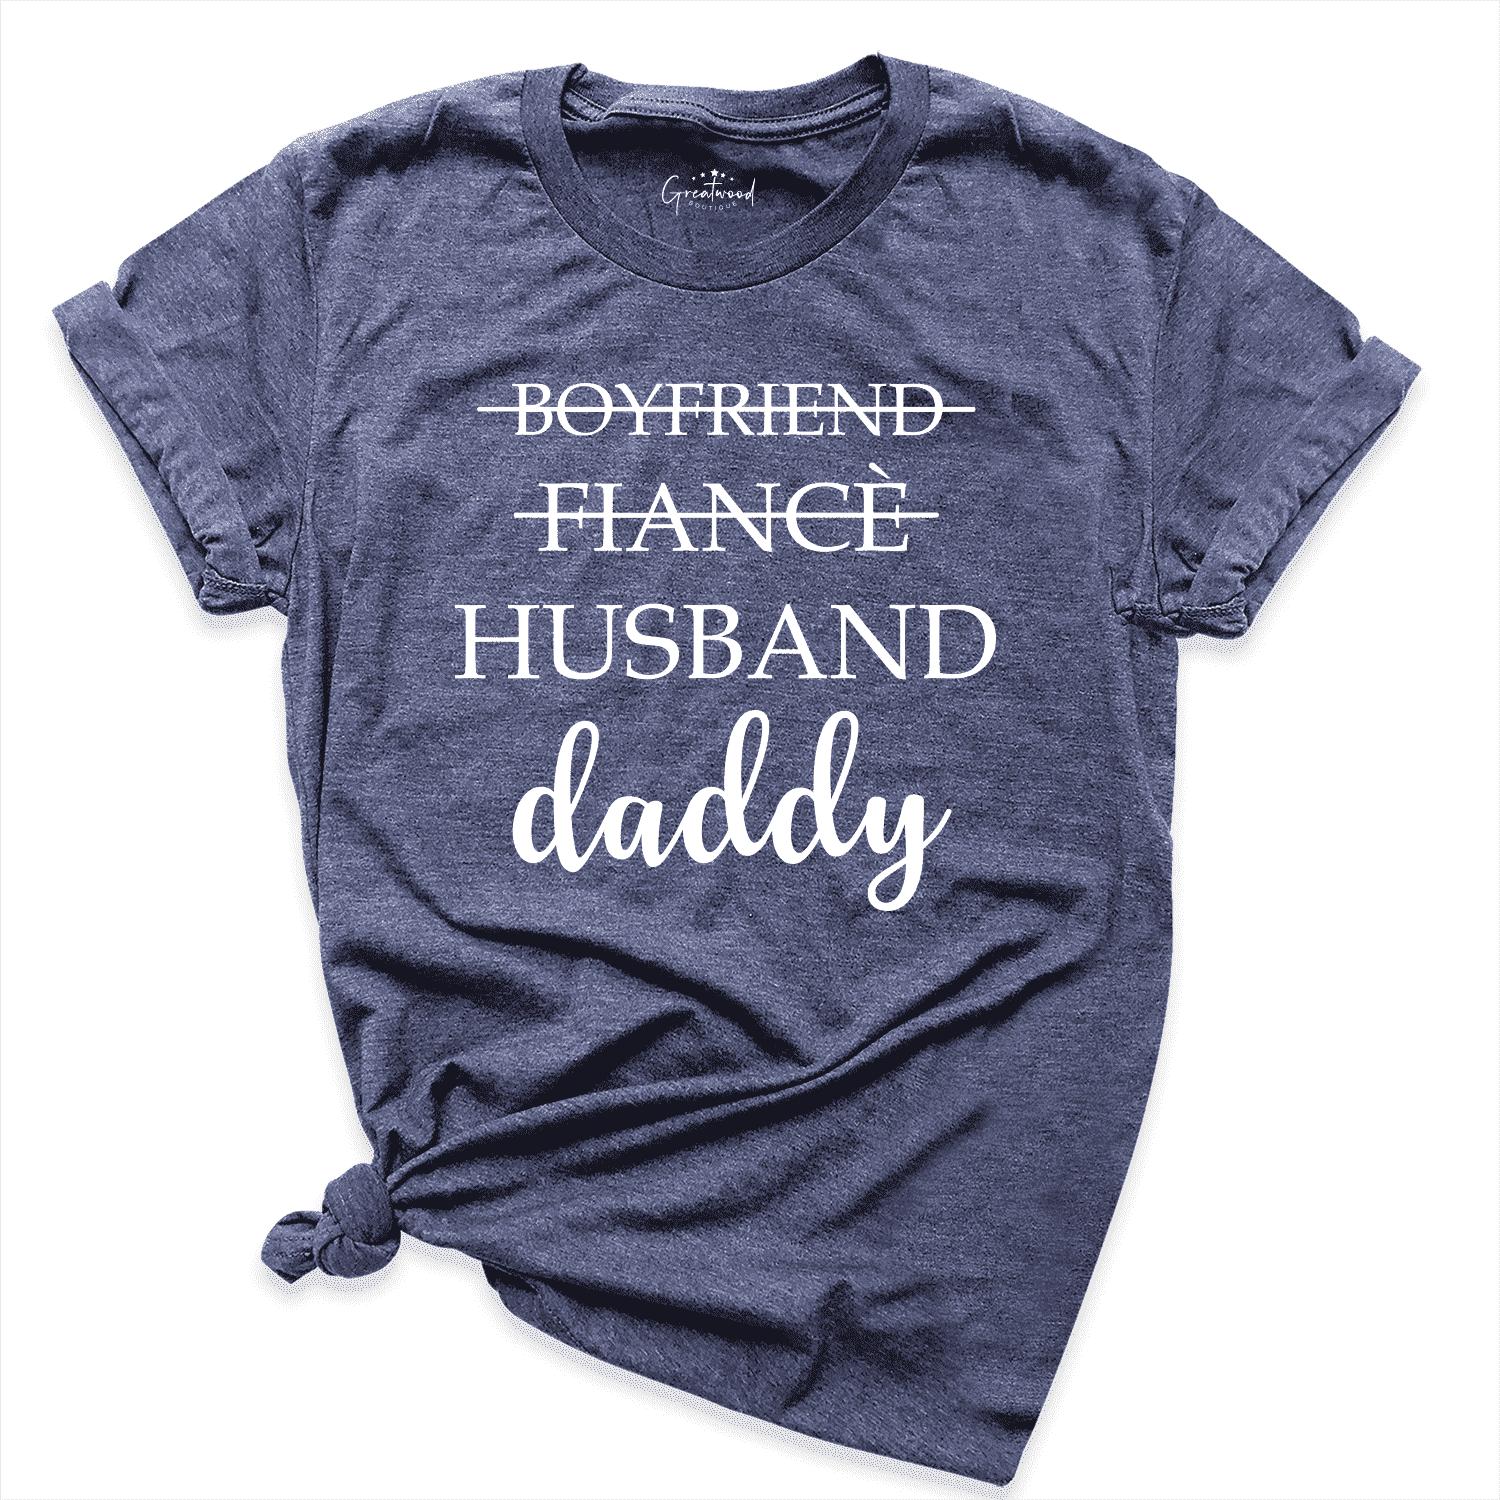 Boyfriend Fiance Husband Daddy Shirt Navy - Greatwood Boutique